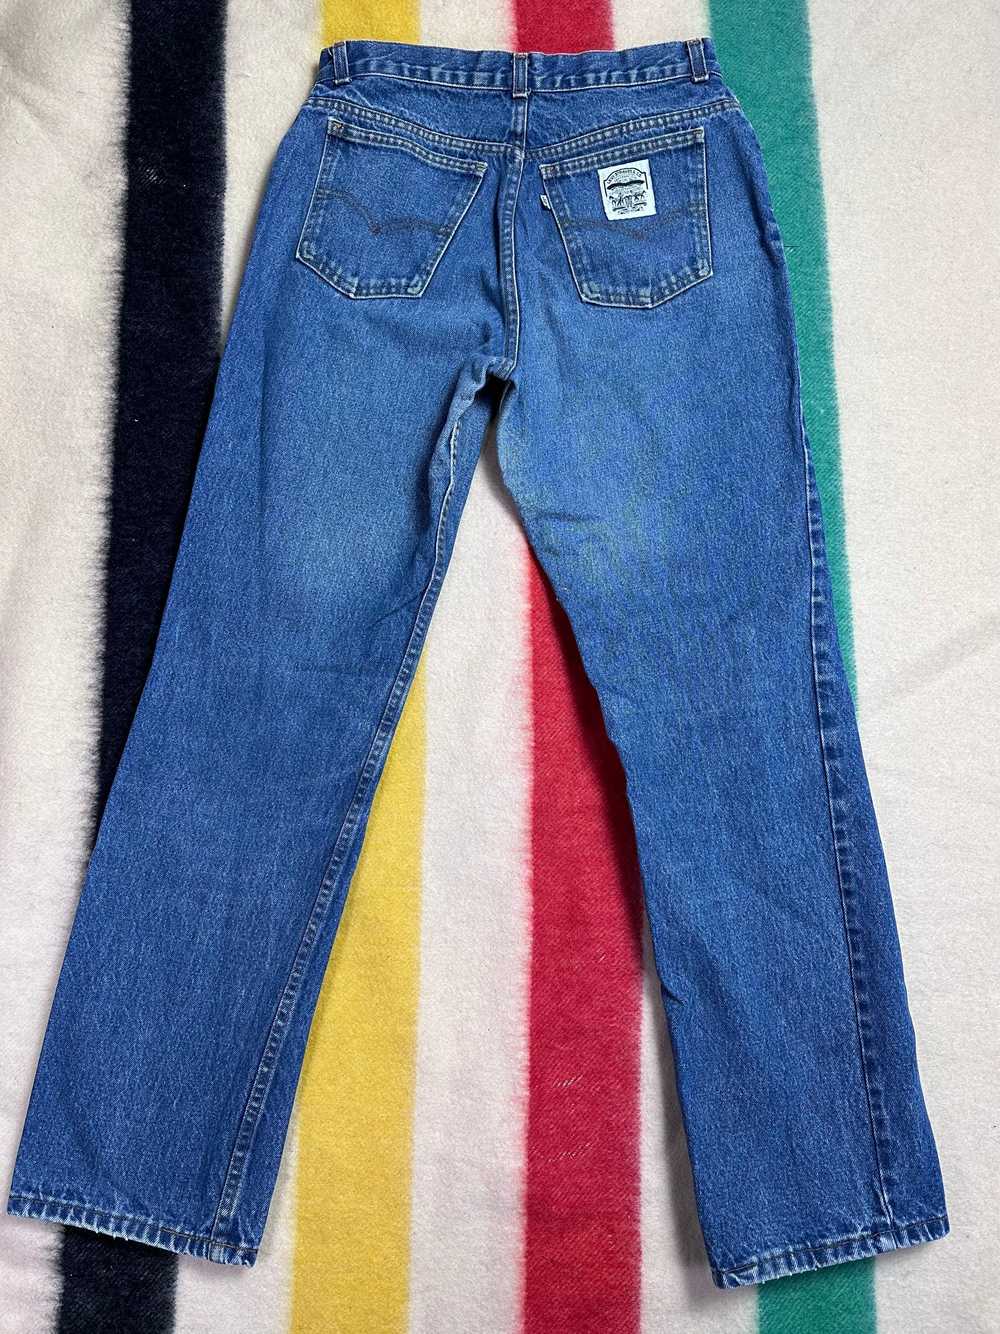 1970s/1980s Levi’s Jeans, 30"x31.5", White Patch - image 3